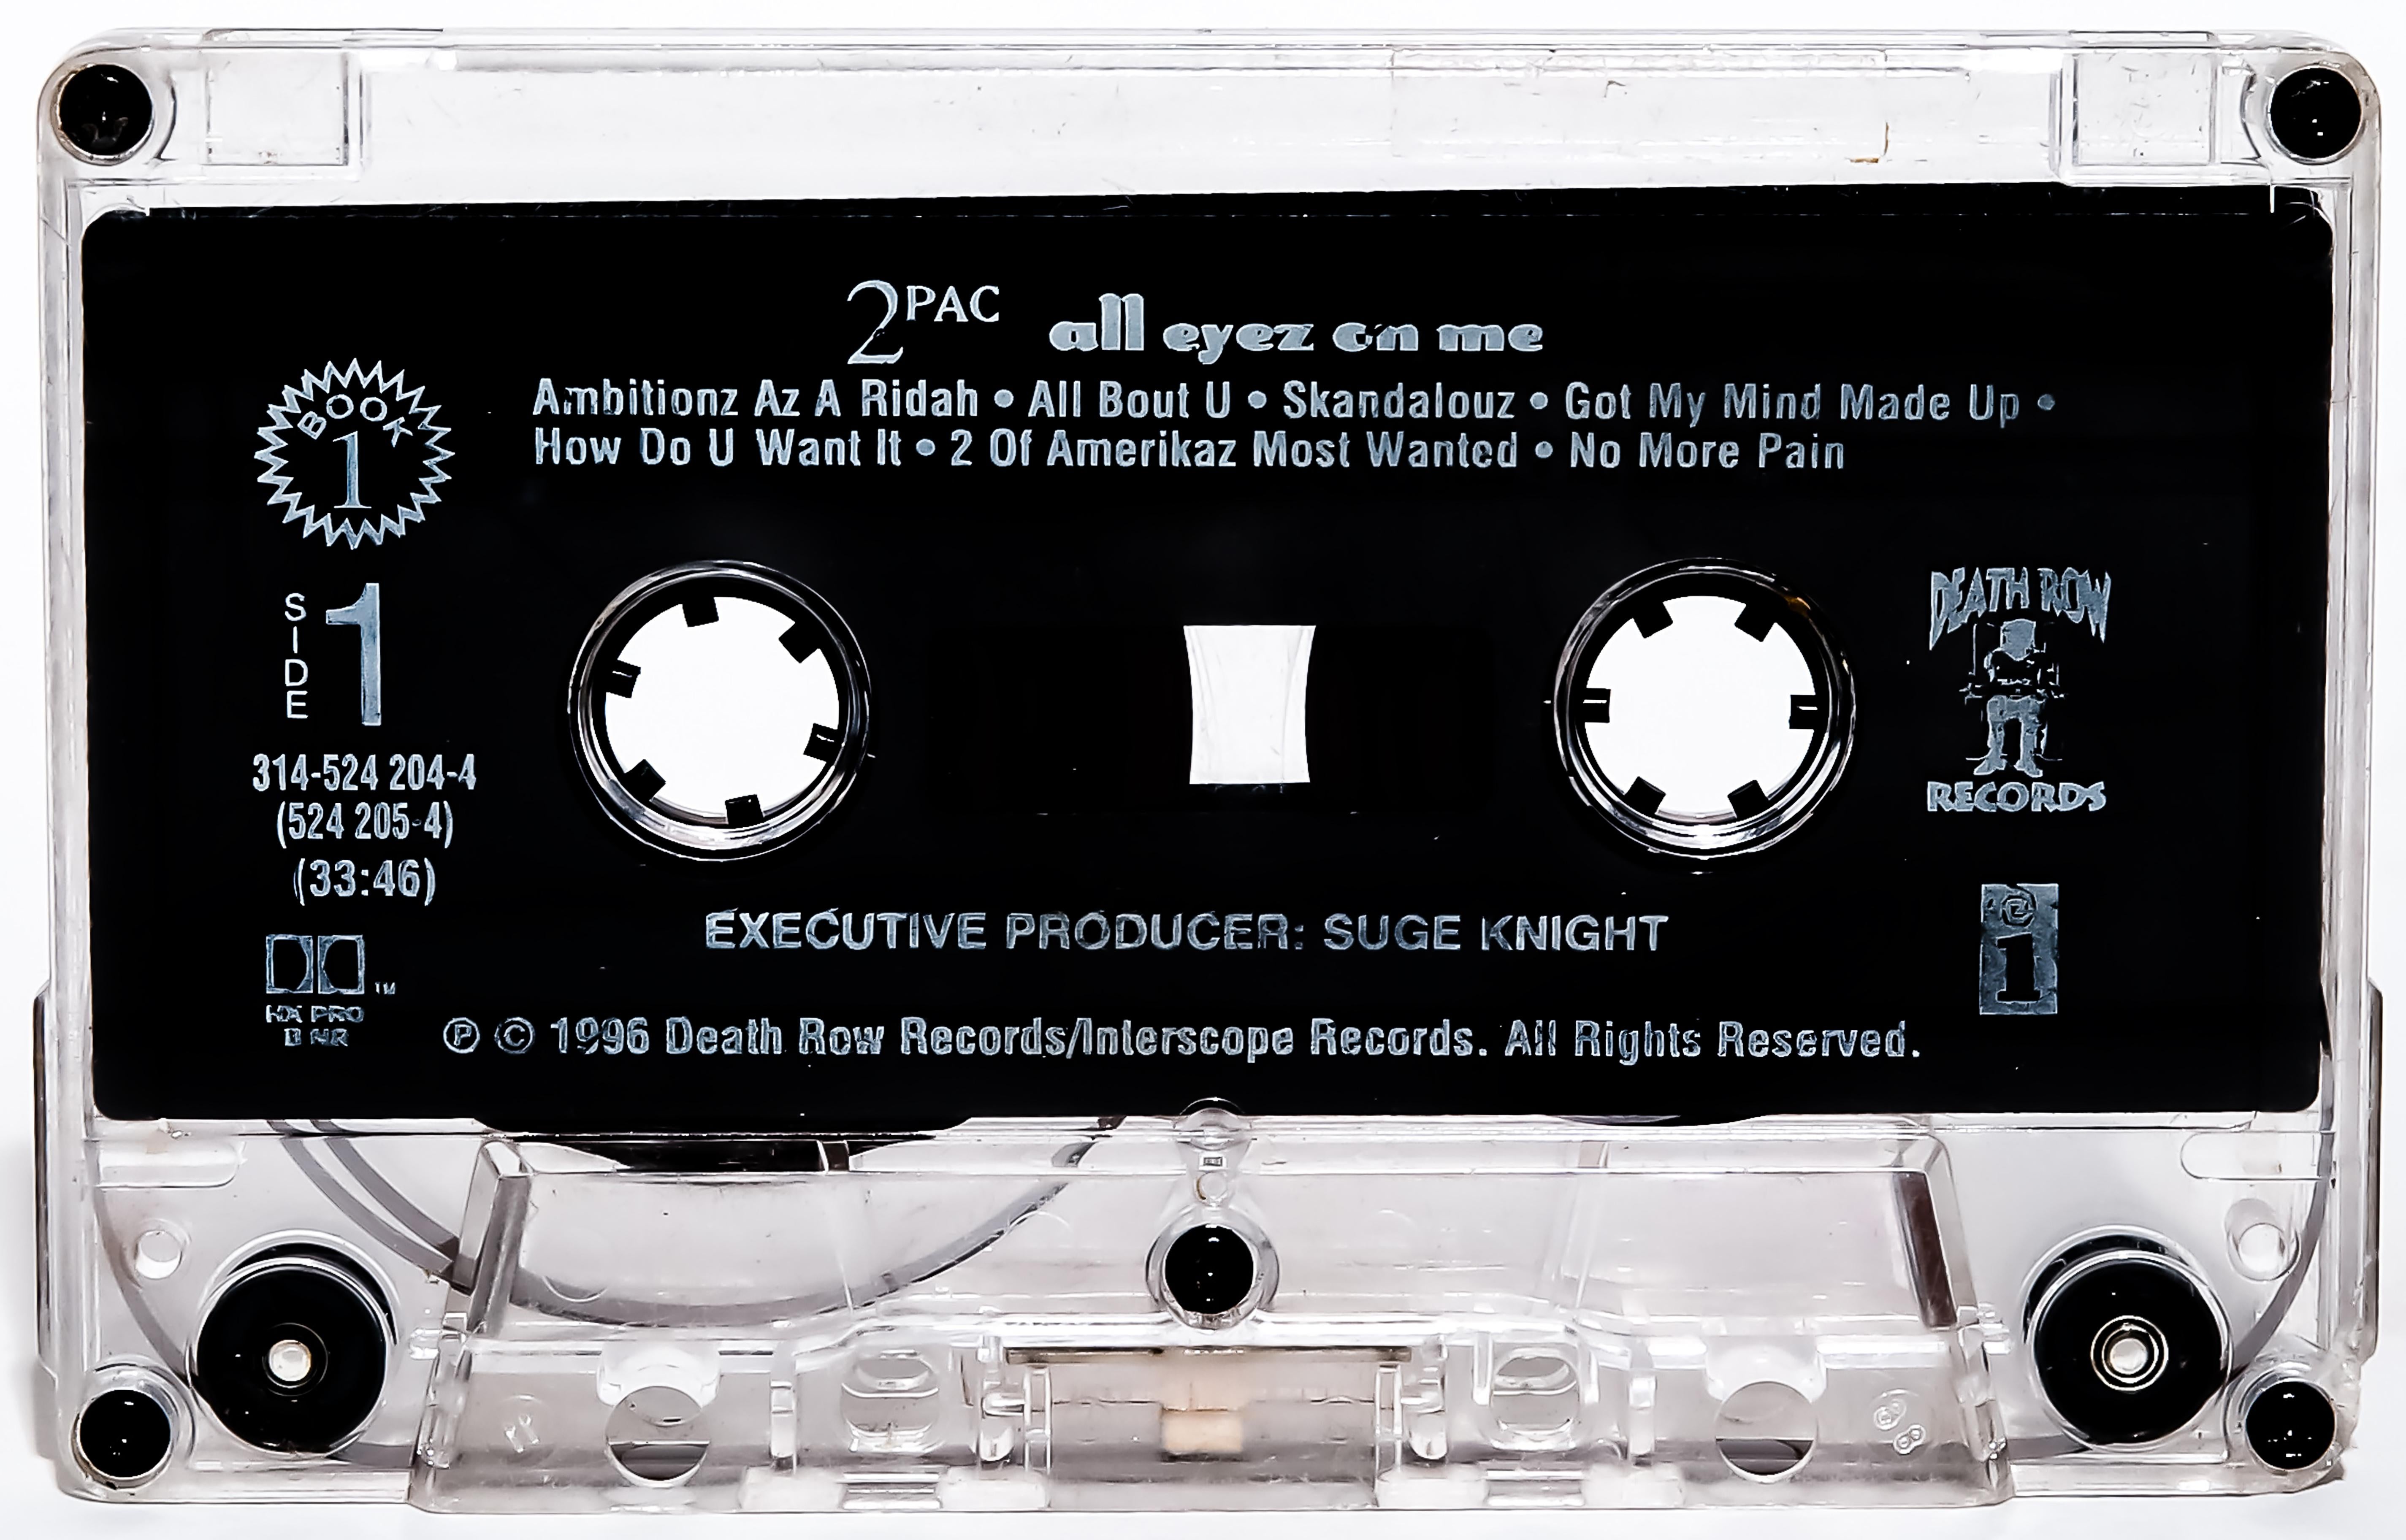 30x50 Tupac Shakur 2pac "All Eyez On Me" Cassette Photography Pop Art Photograph